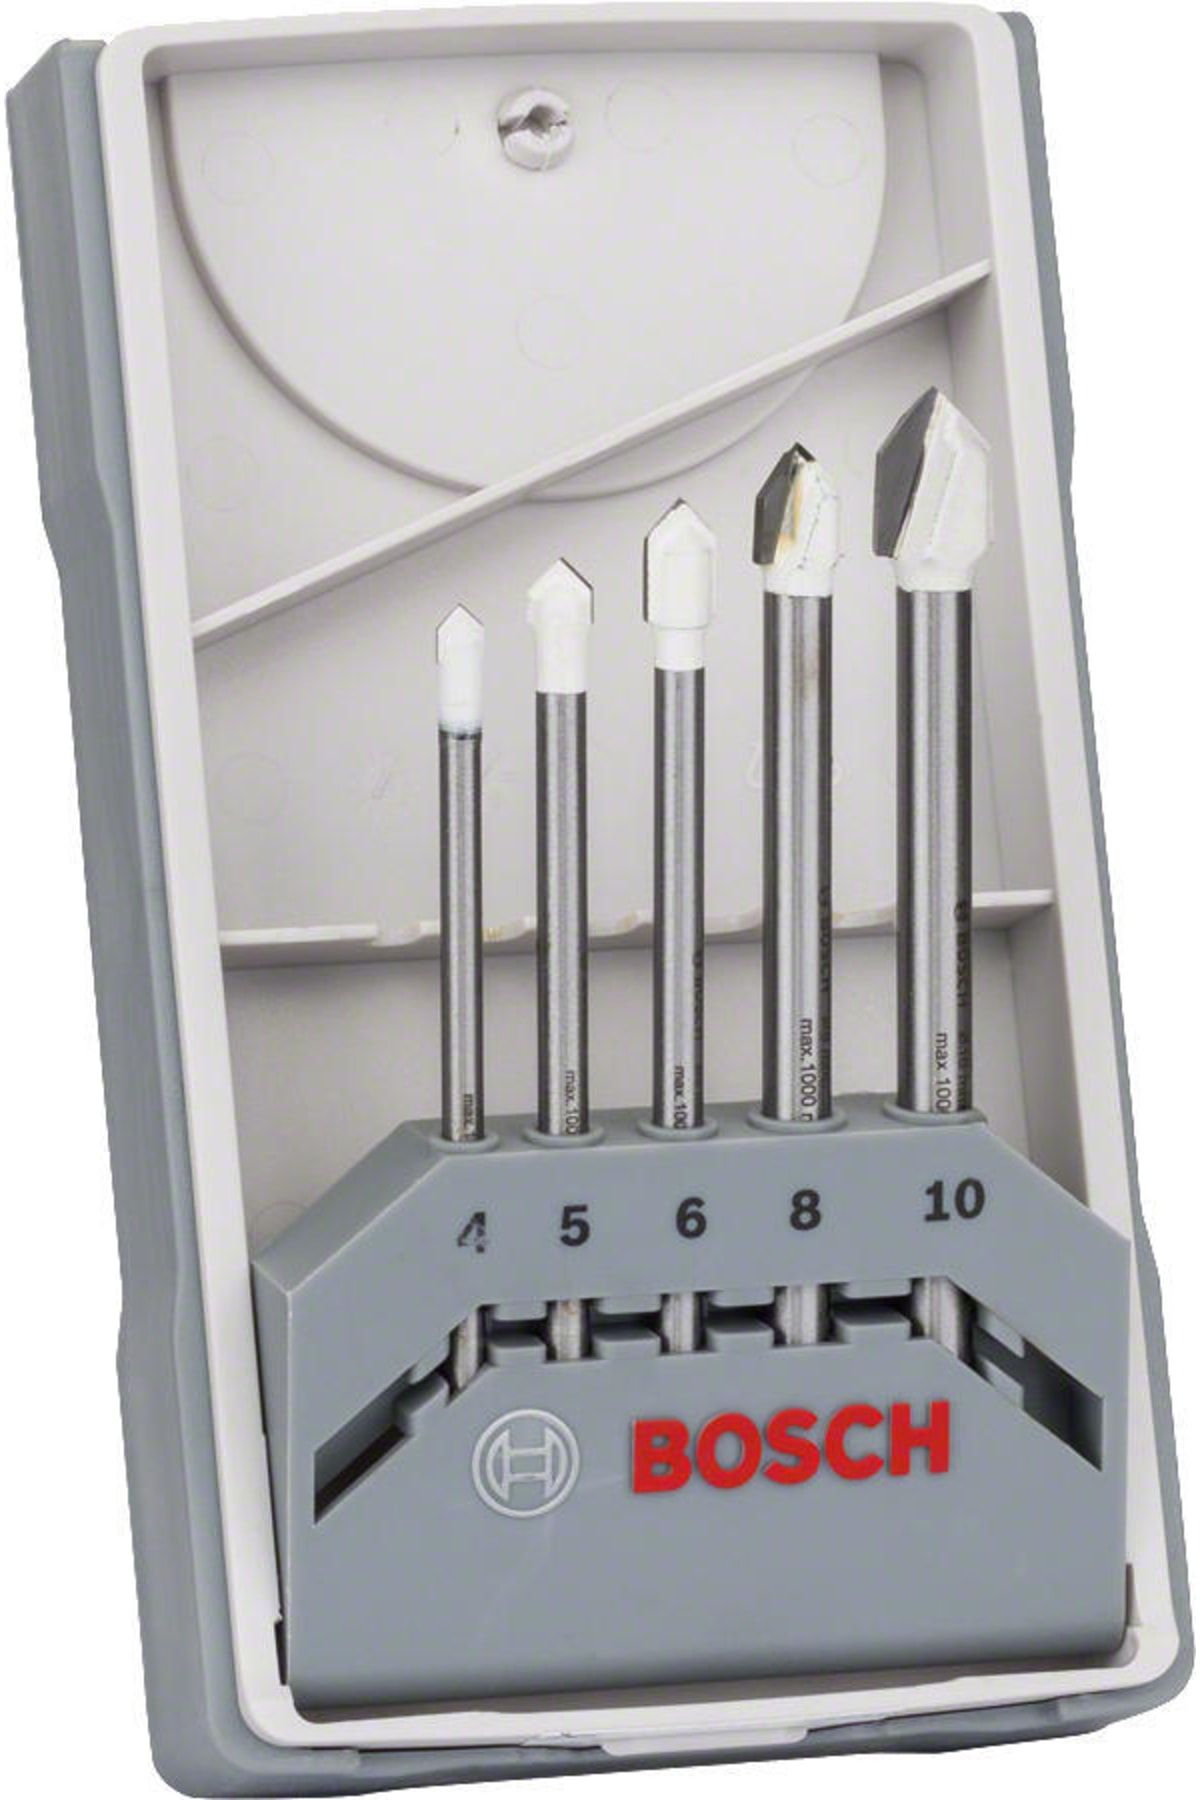 Bosch Cyl-9 Seramik Delme Ucu Seti 5 Parça - 2608587169